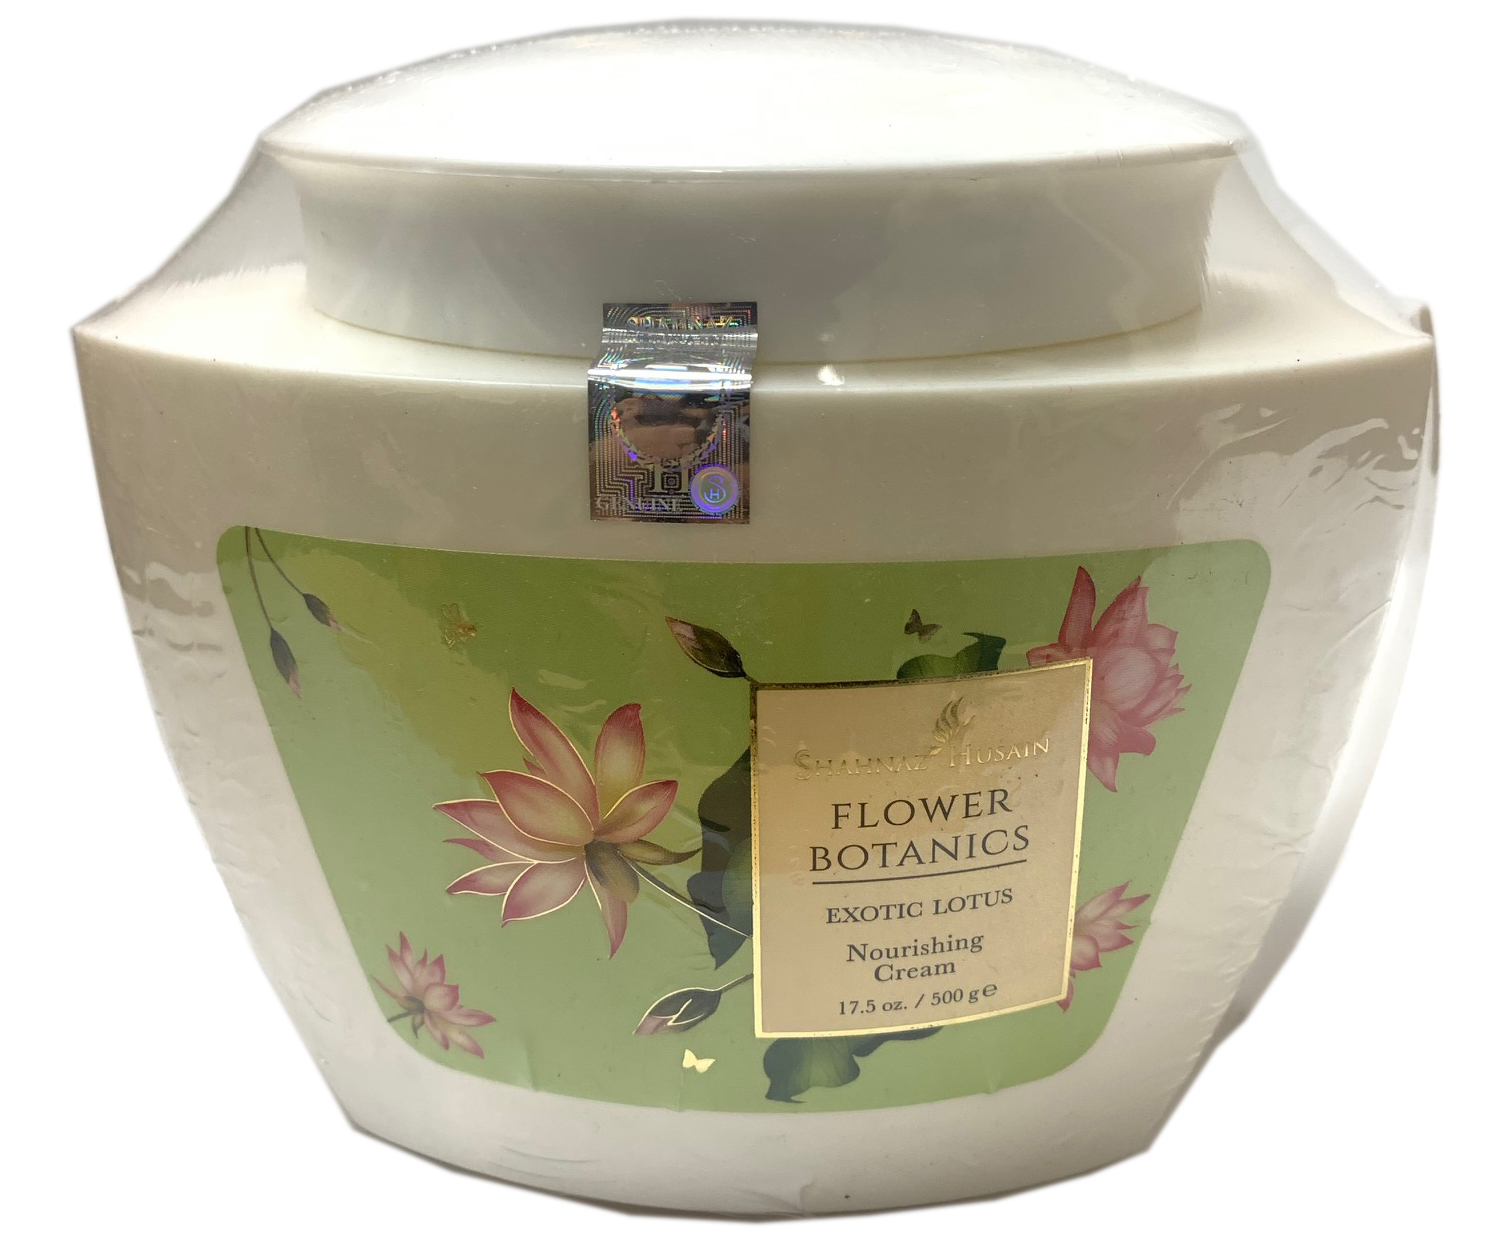 Flower Botanics Exotic Lotus Nourishing Cream 500 gms